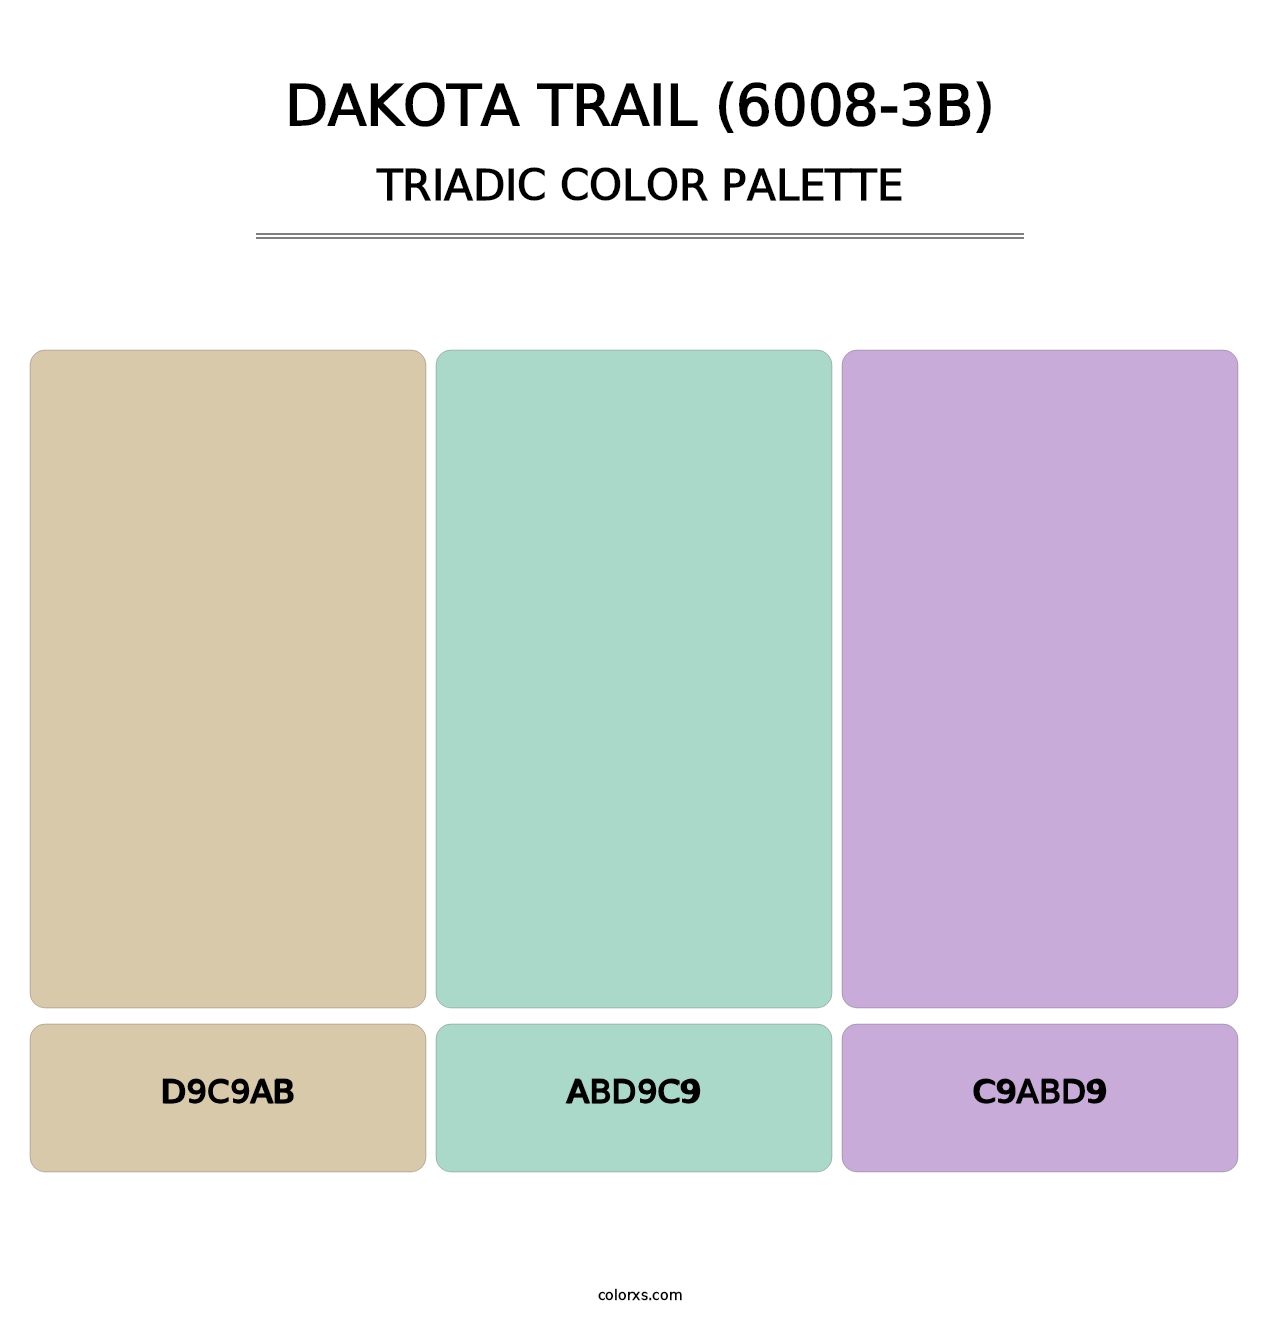 Dakota Trail (6008-3B) - Triadic Color Palette